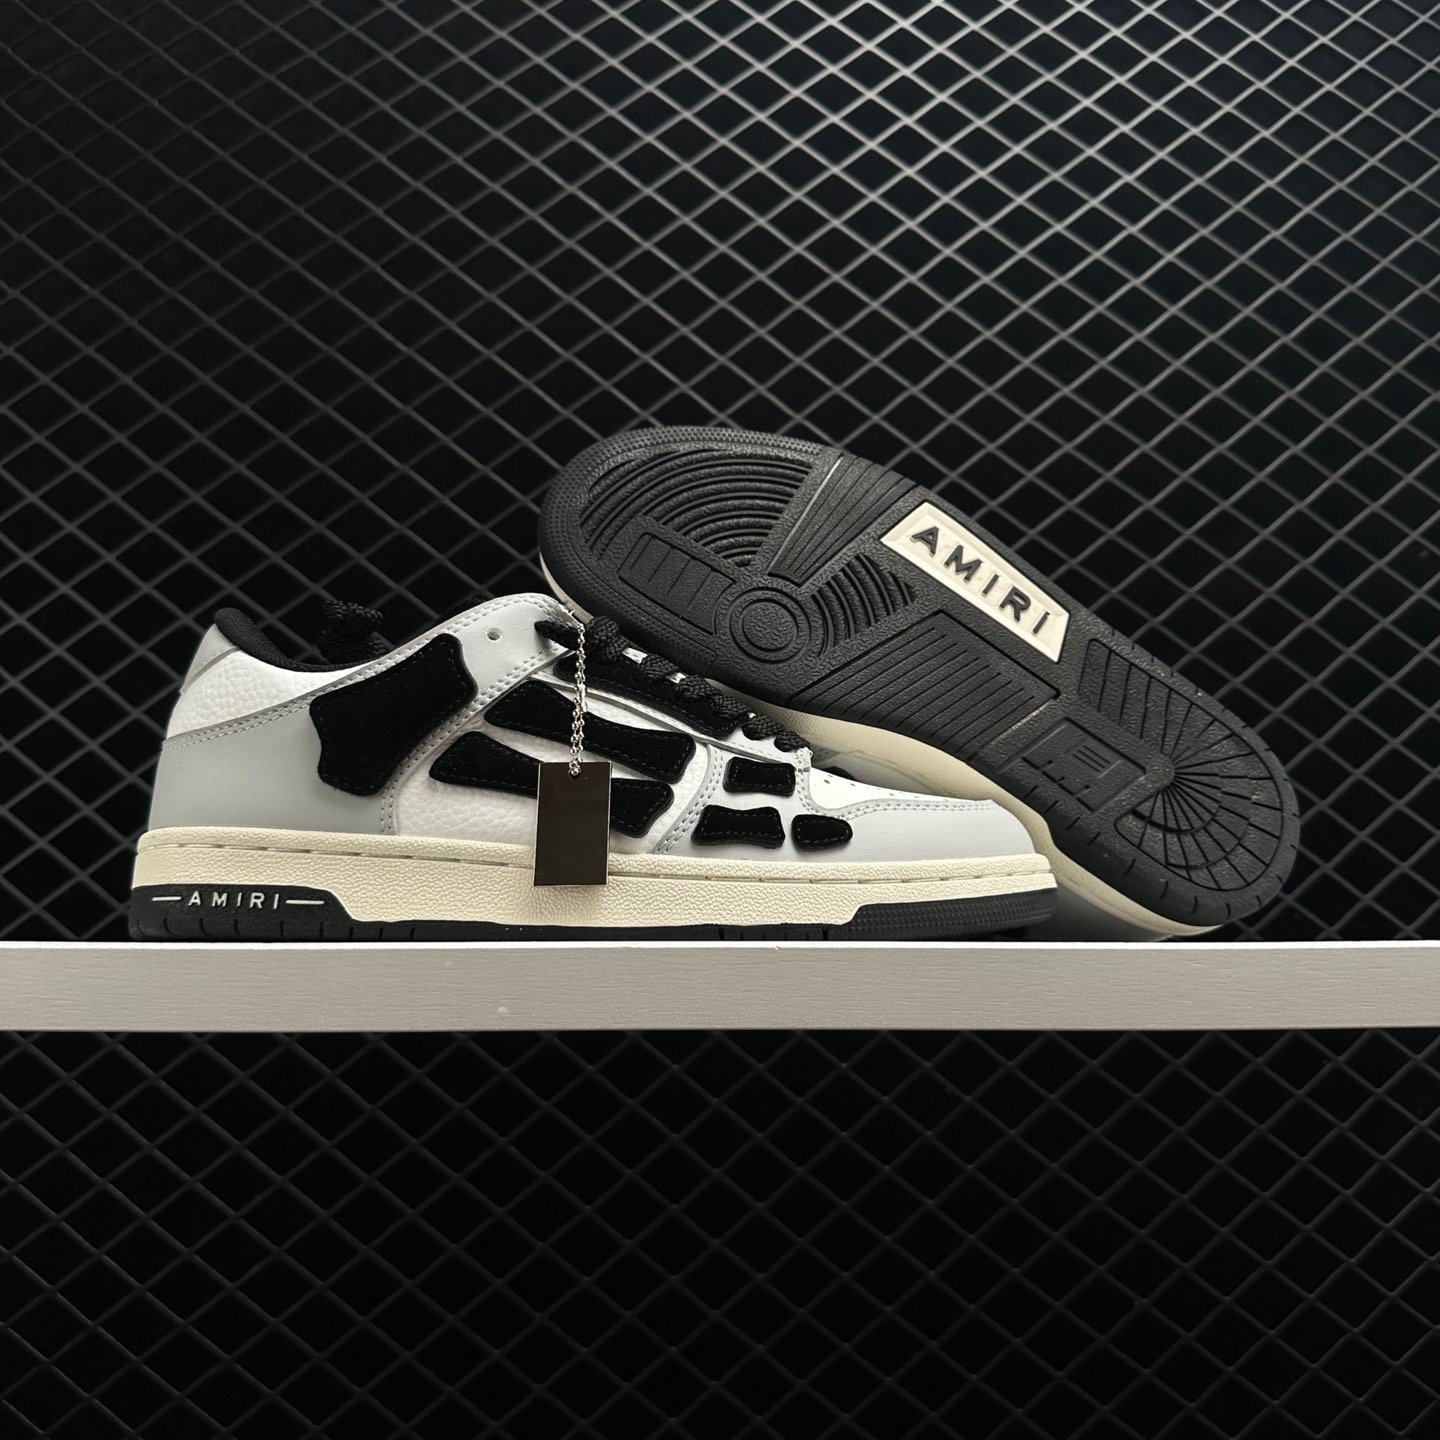 Amiri Skel Top Low White Light Grey Black AW22MFS003-030 - Sleek and Stylish Footwear for Men's Fashion